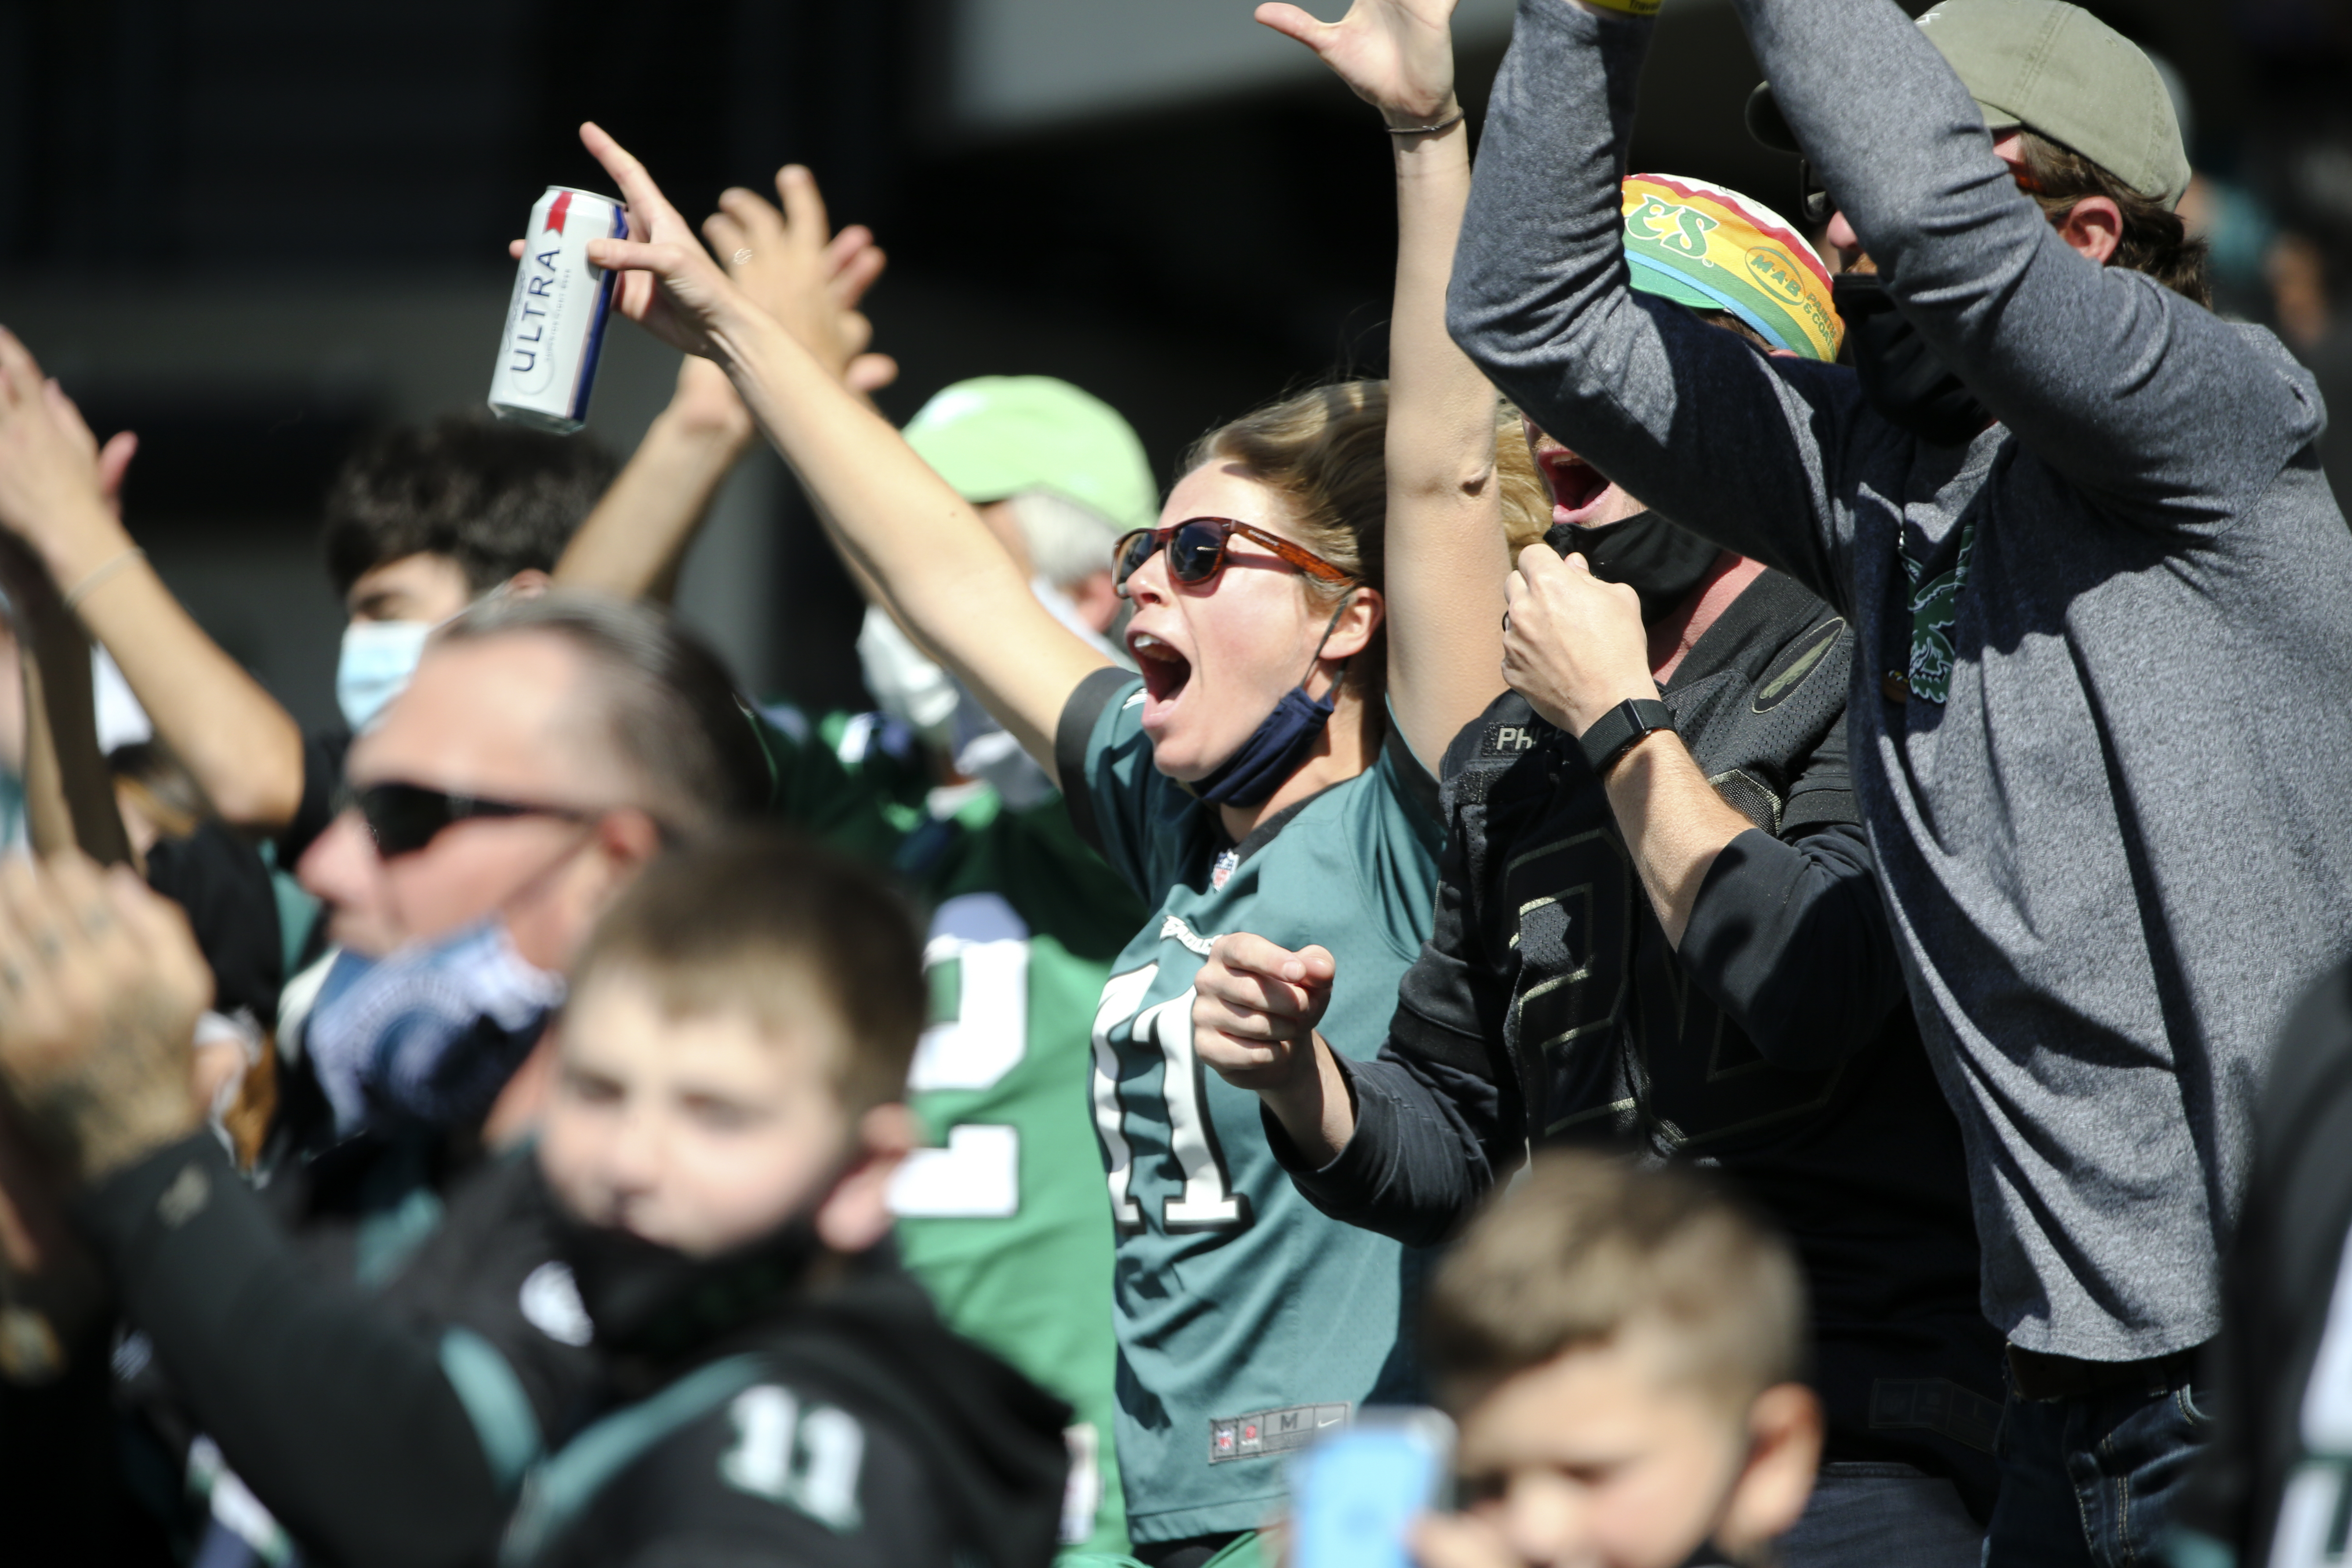 Eagles fans soaring high – Times News Online